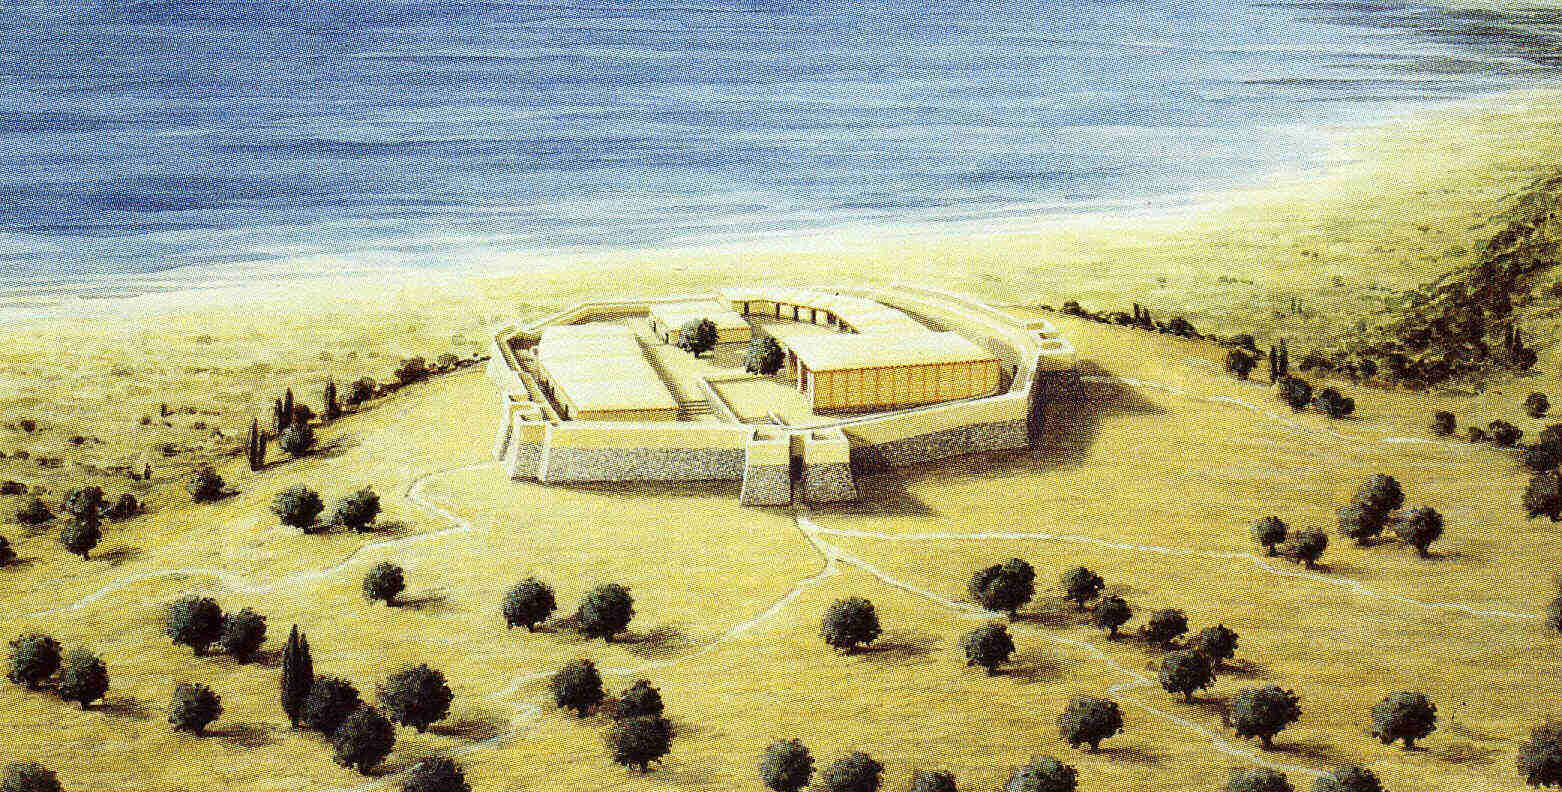 Troya I hacia 2700 AEC